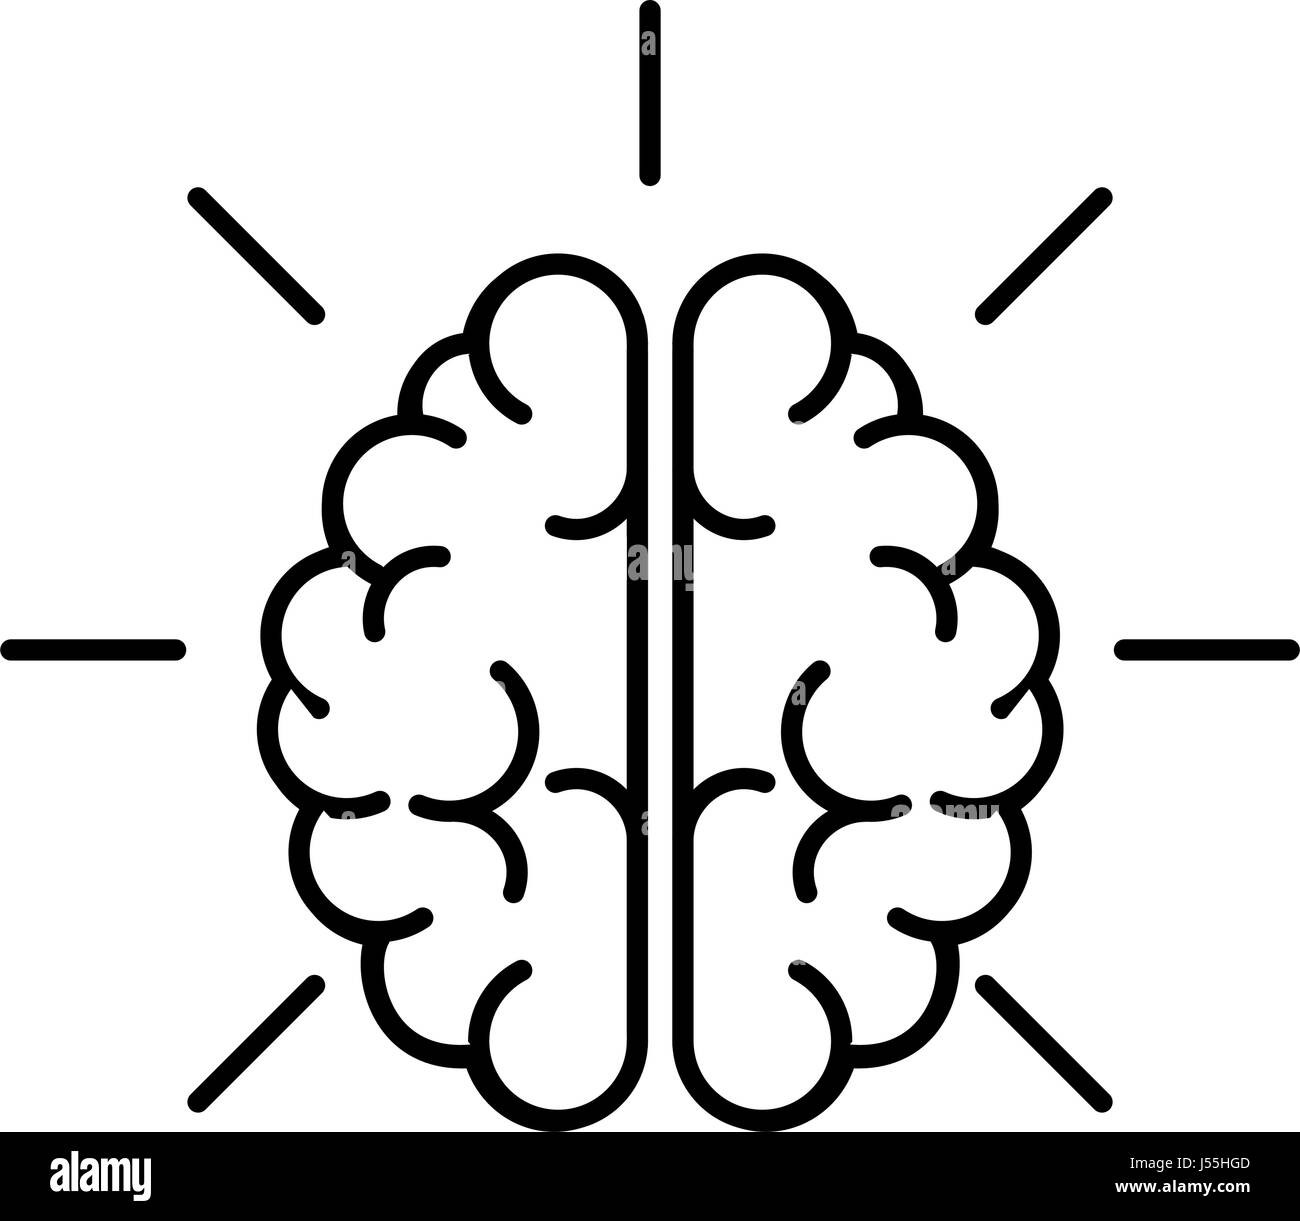 Human brain symbol Stock Vector Image & Art - Alamy